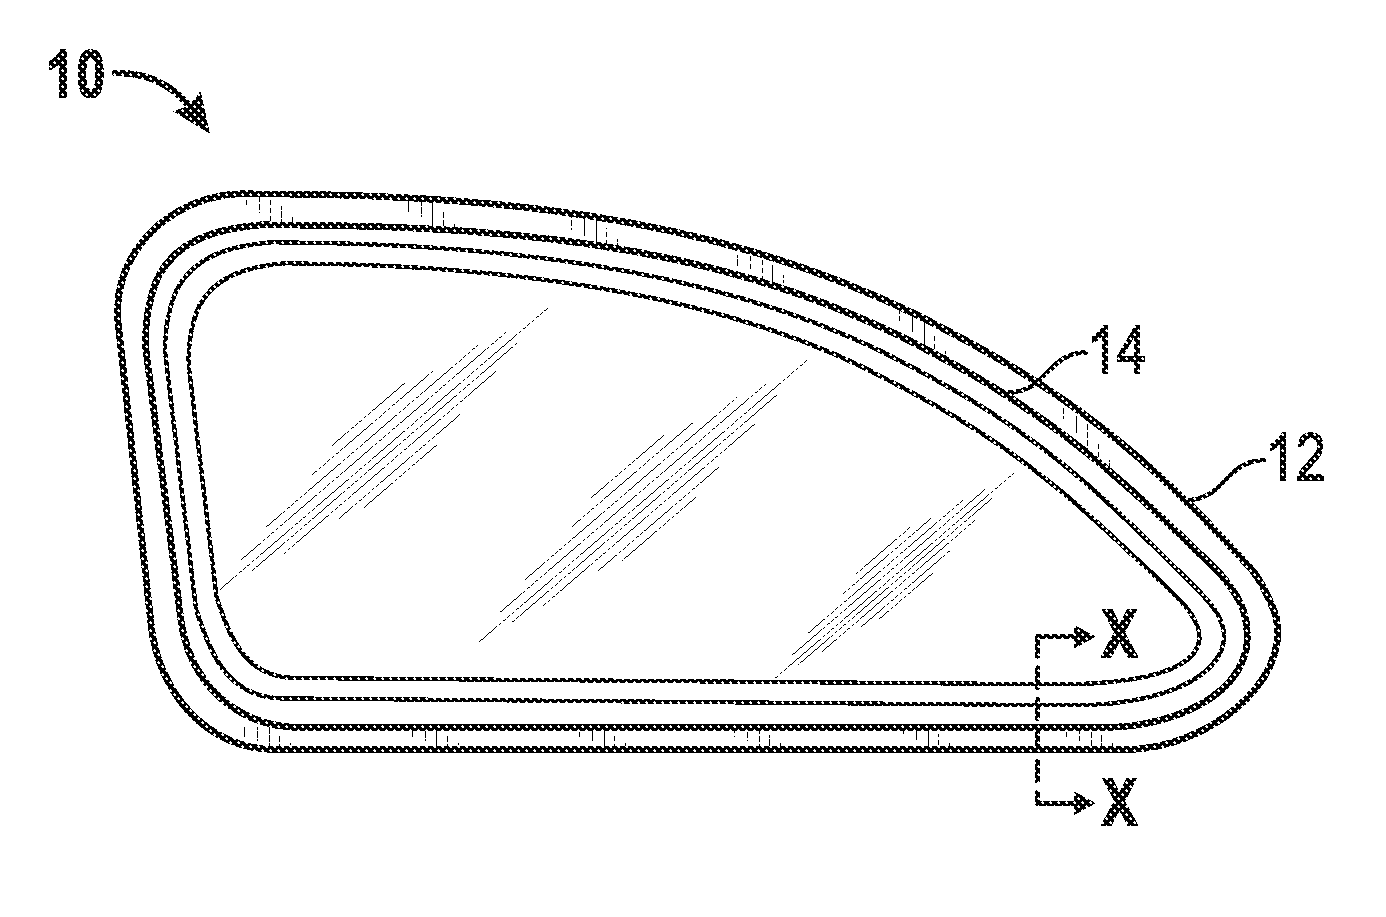 Elastically deformable flange locator arrangement and method of reducing  positional variation